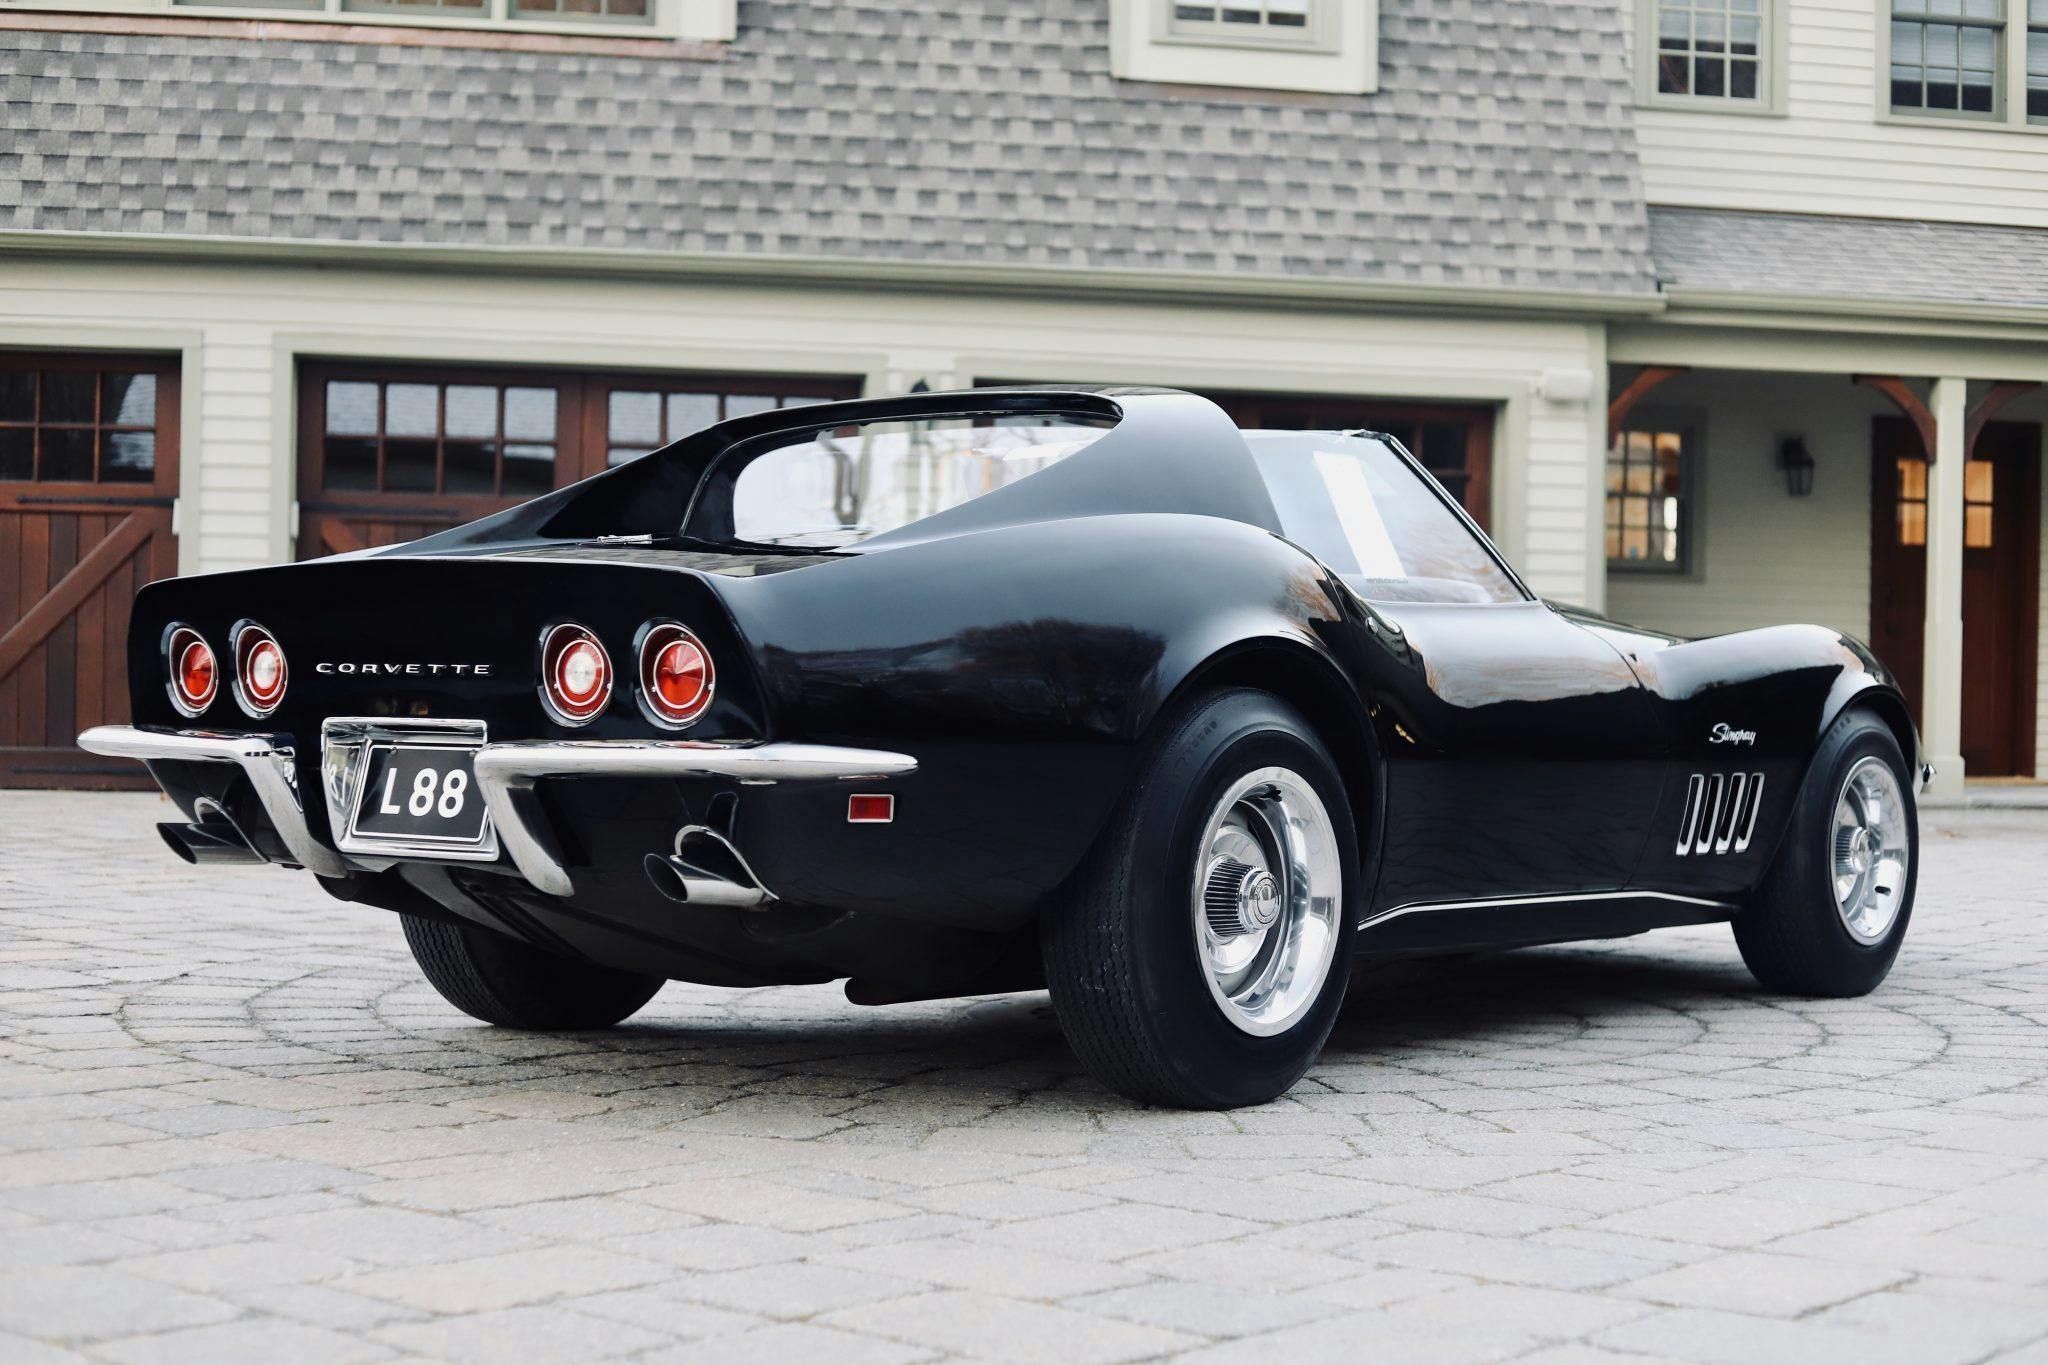 1969 Chevrolet Corvette L88 coupe Tuxedo Black rear